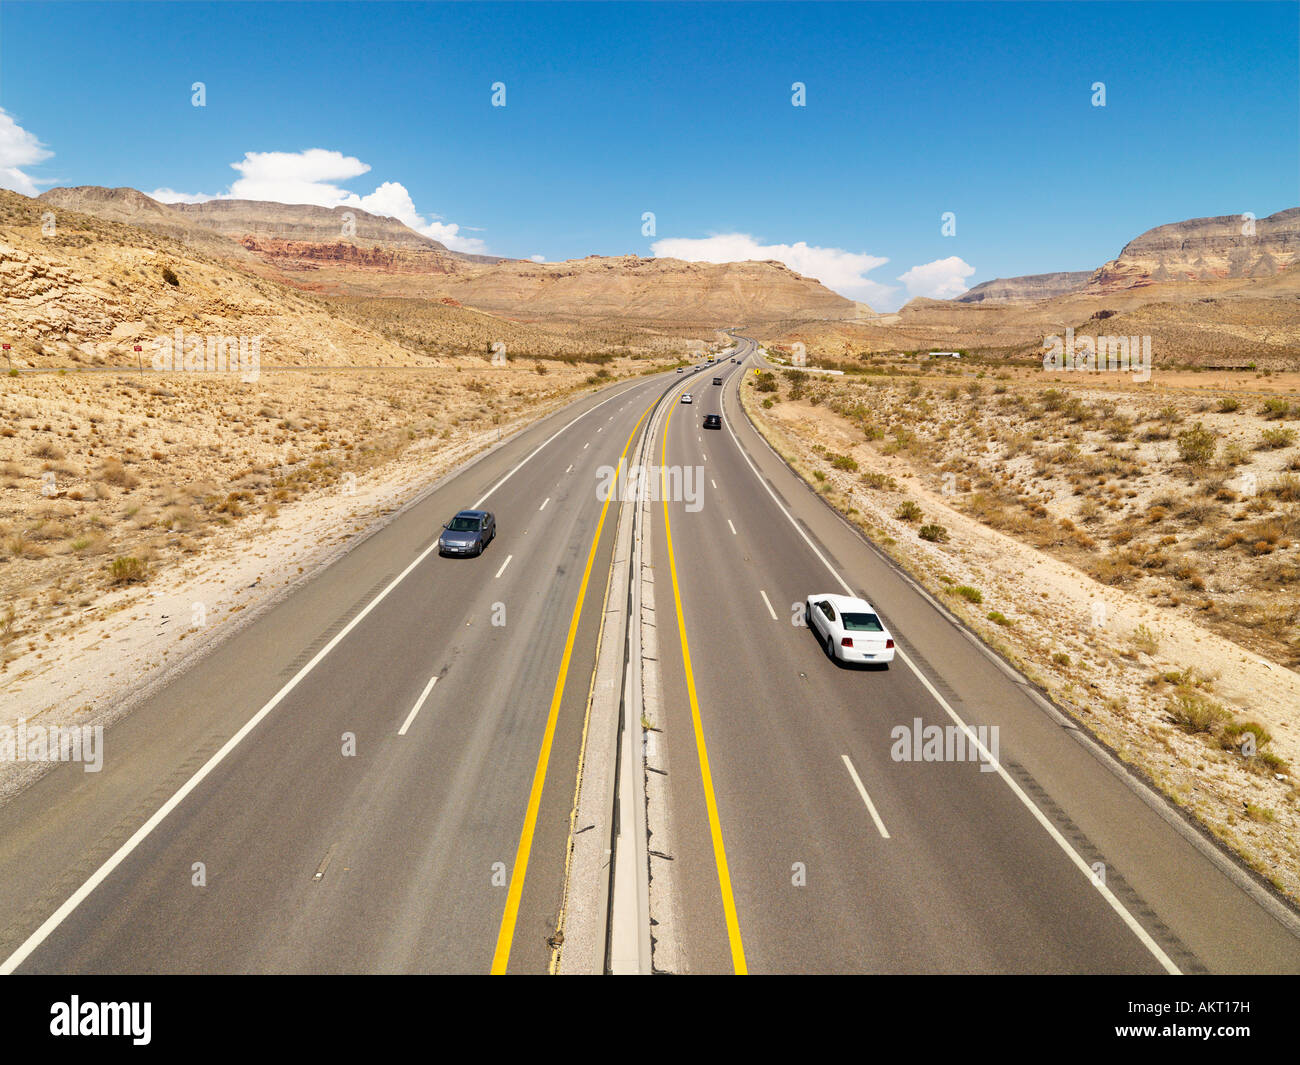 Birds eye view of automobiles on rural desert highway Stock Photo